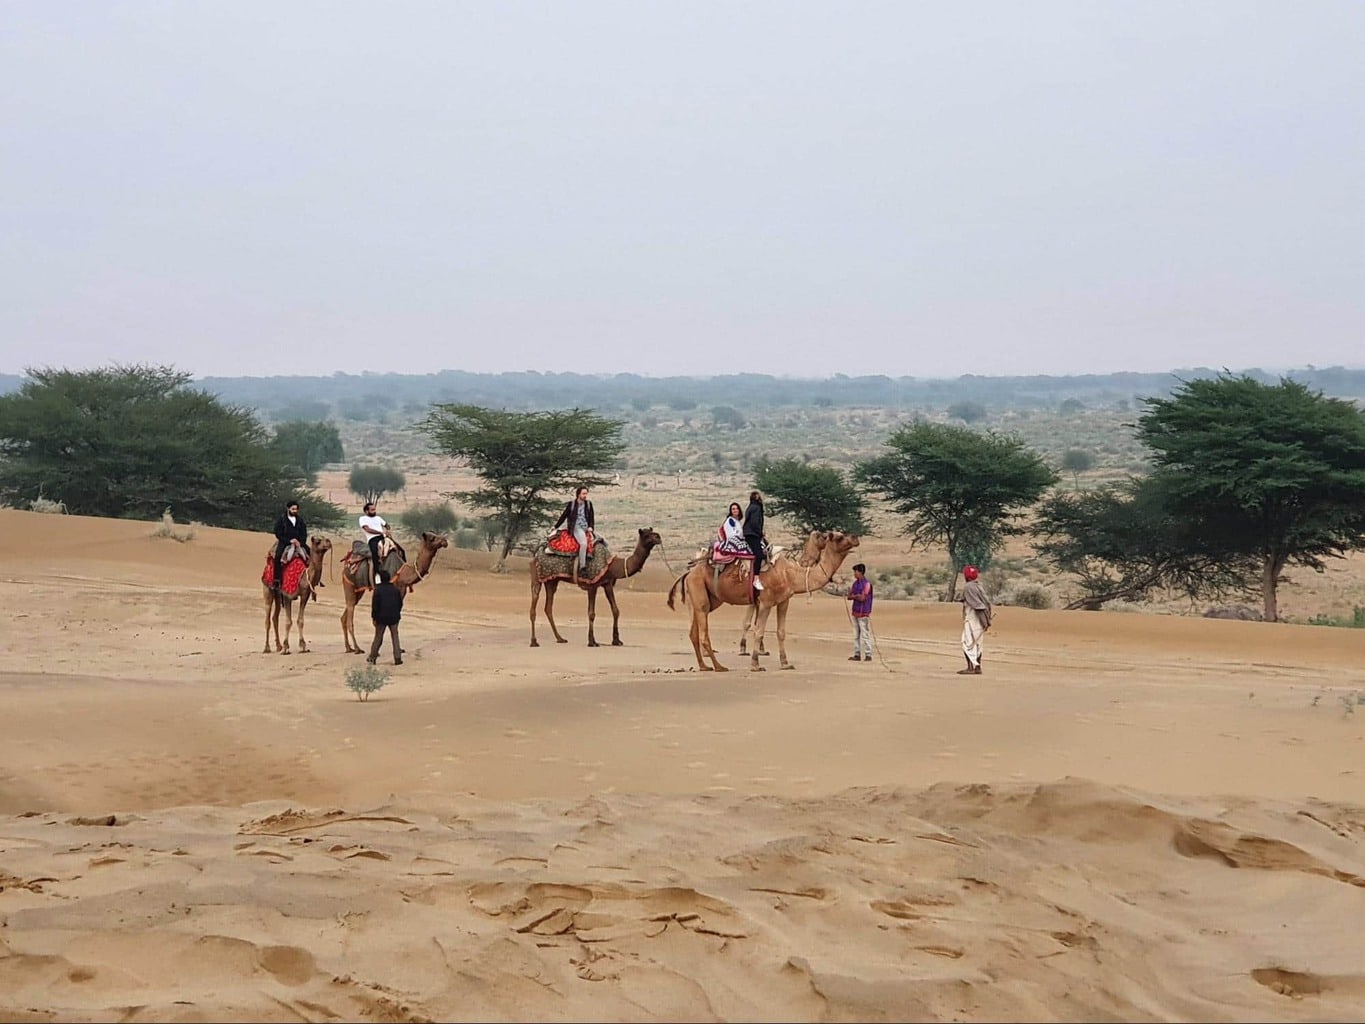 Desert safari, but don’t ride the camels